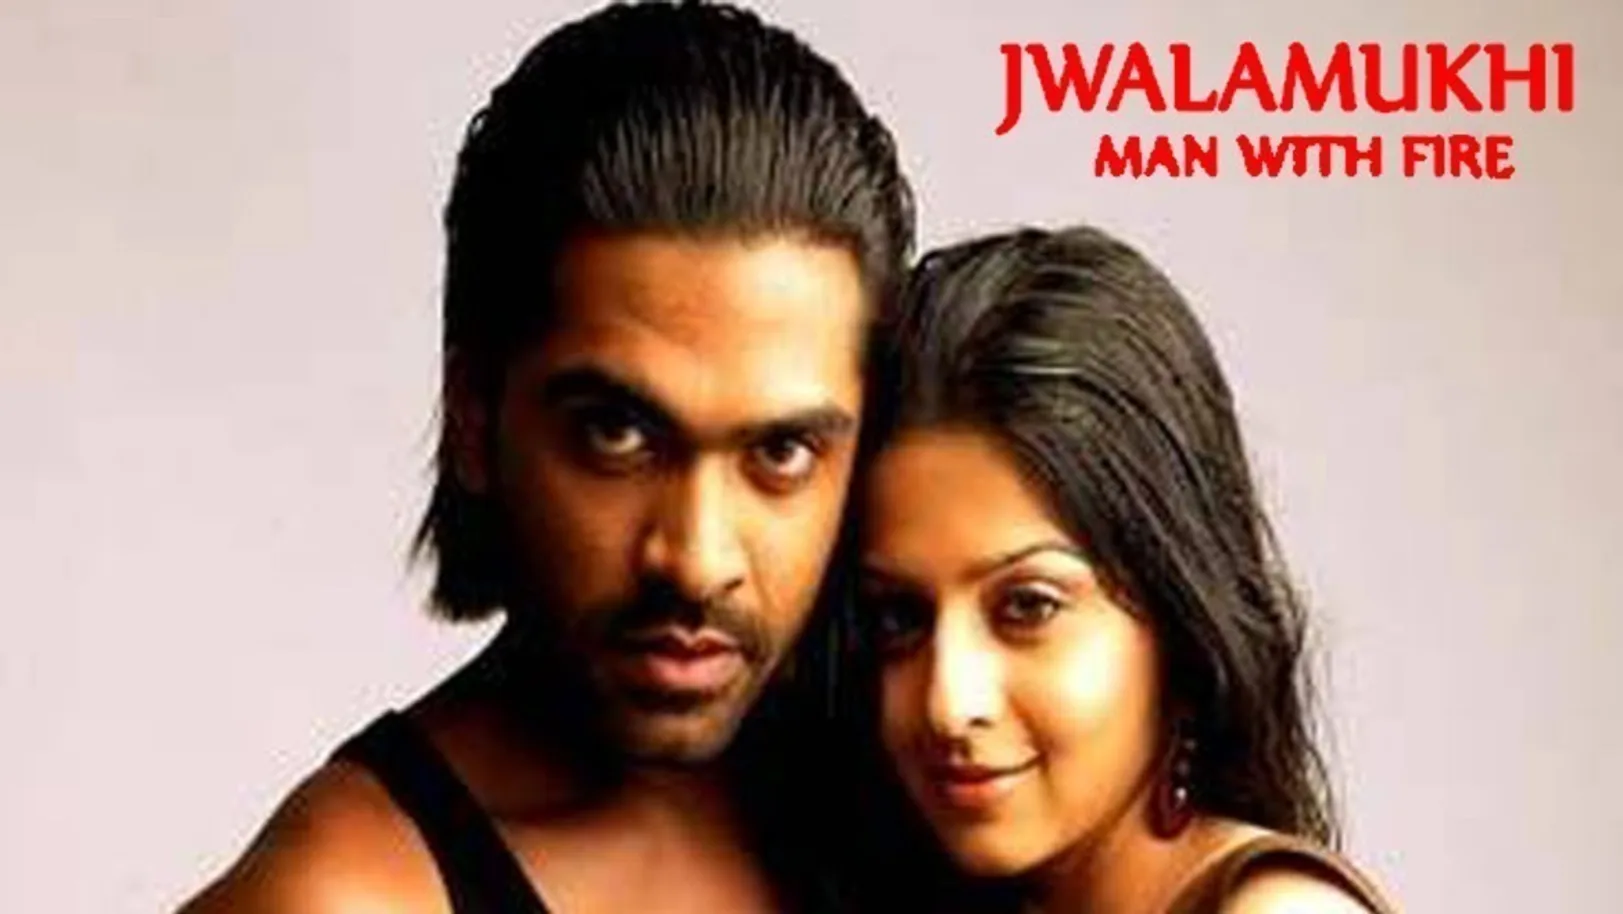 Jwalamukhi - Man with Fire Movie